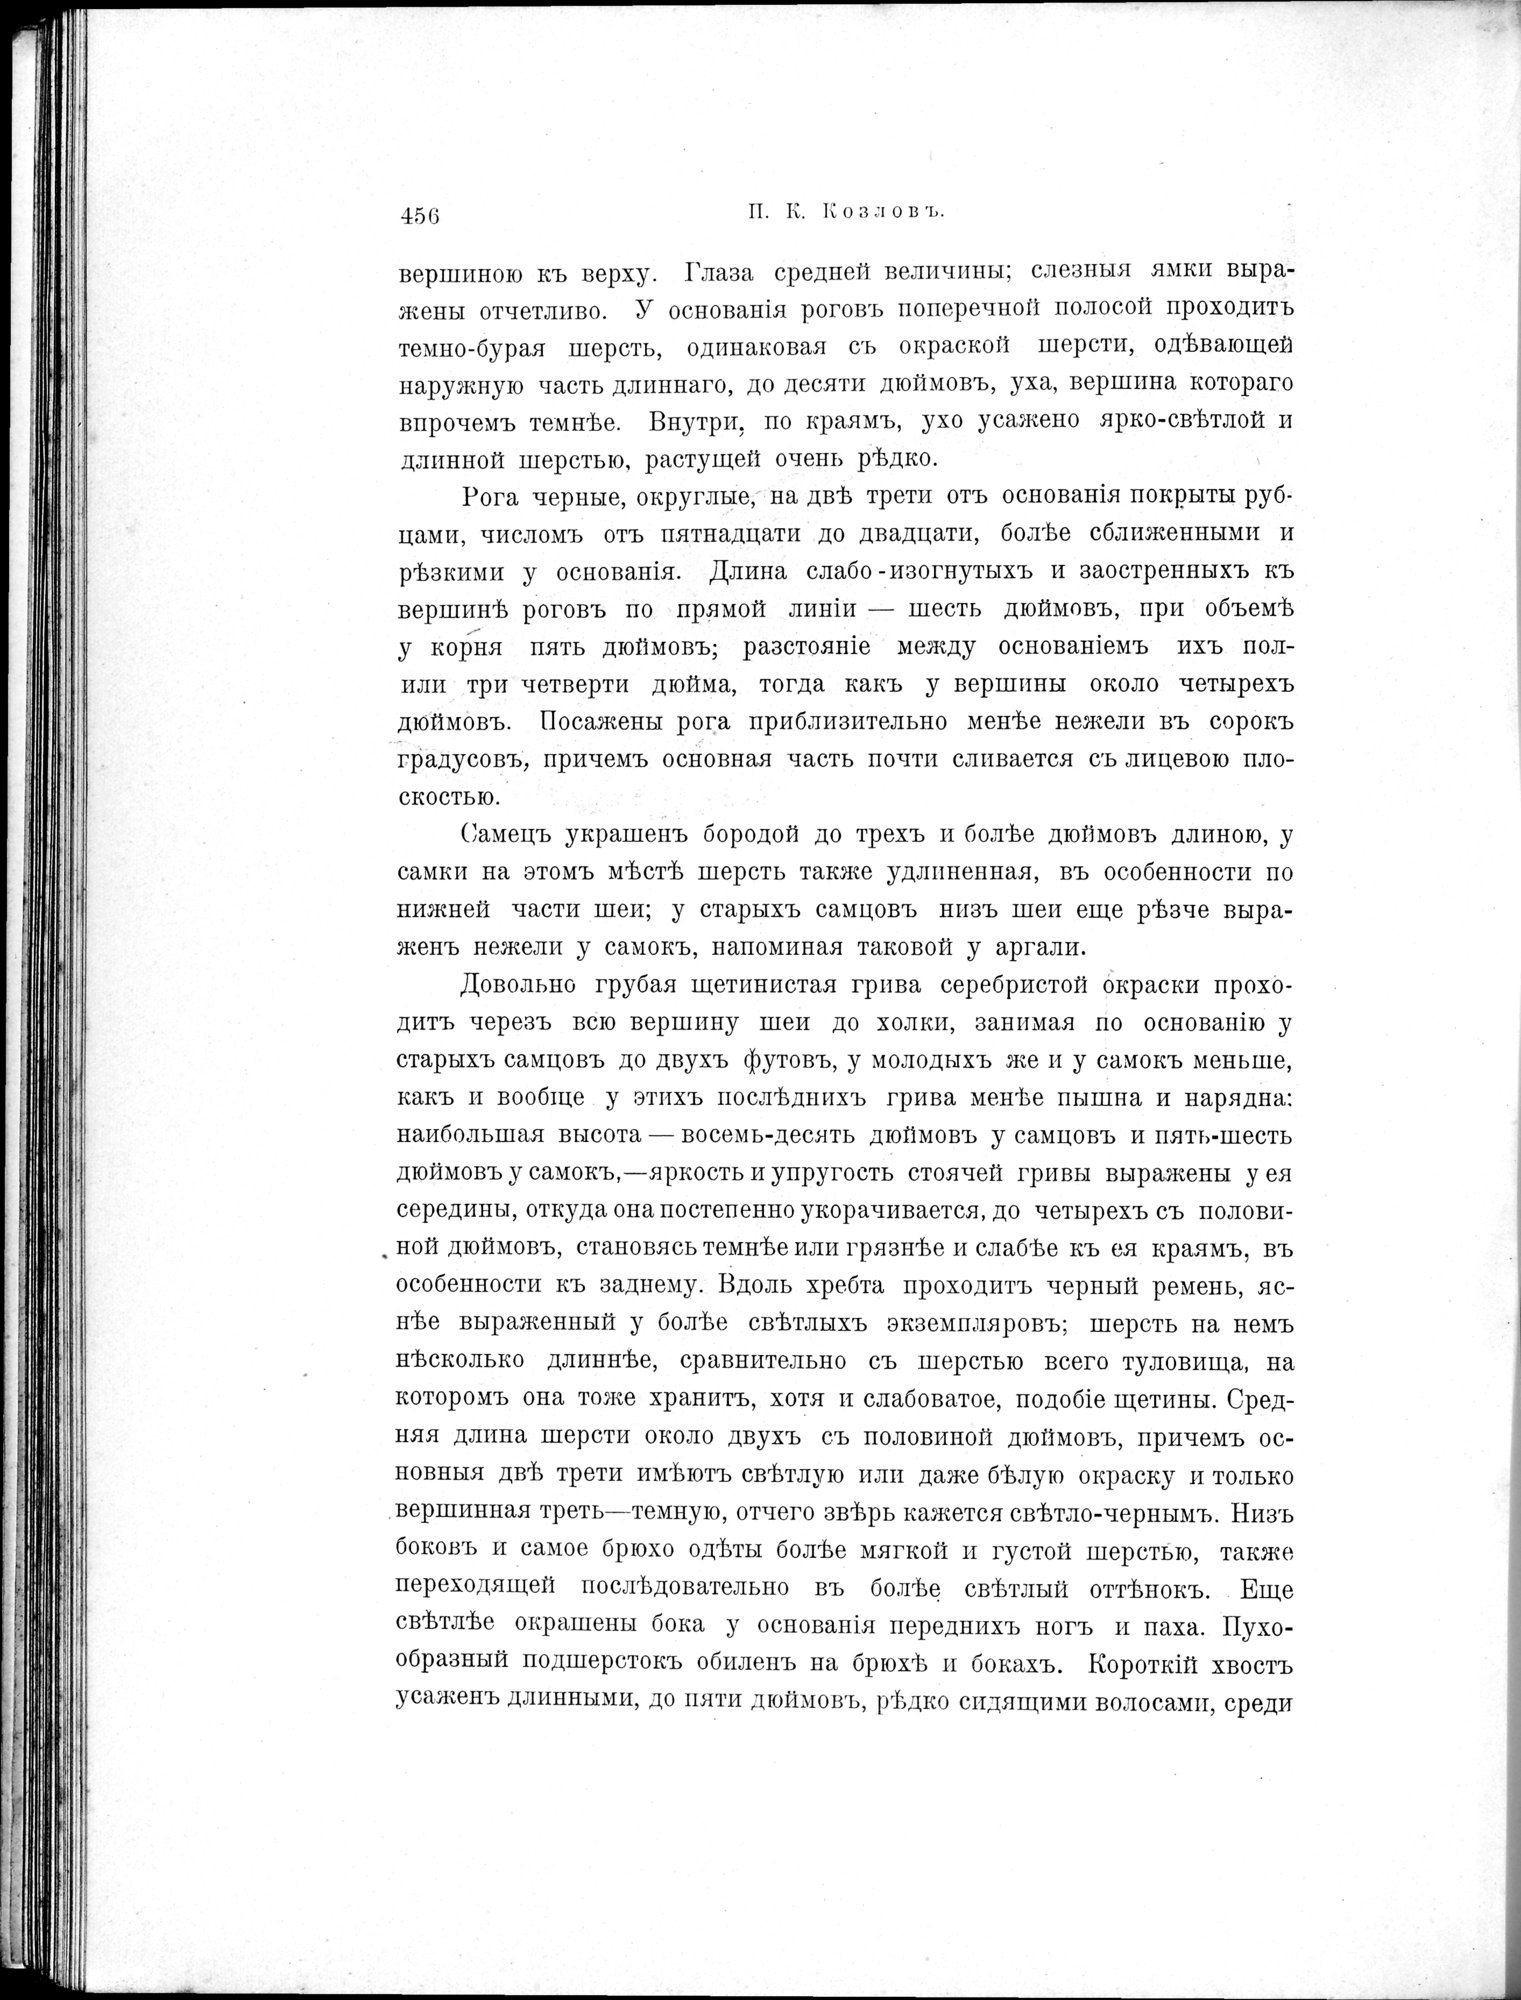 Mongoliia i Kam : vol.2 / Page 260 (Grayscale High Resolution Image)